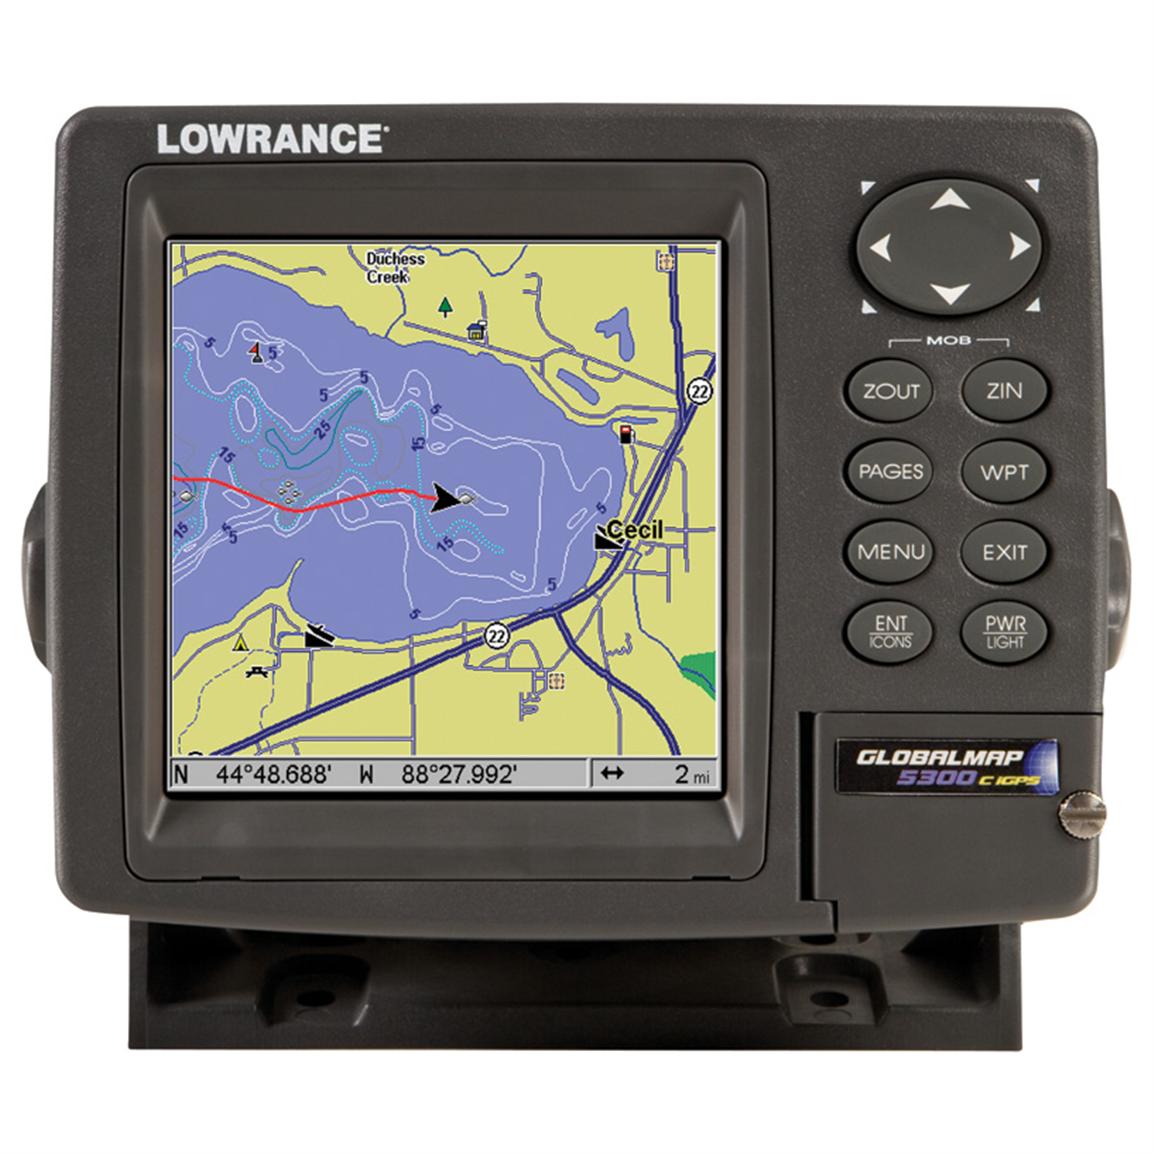 Lowrance Globalmap5300C iGPS GPS navigator Marine Chartplotter Only head & cover 